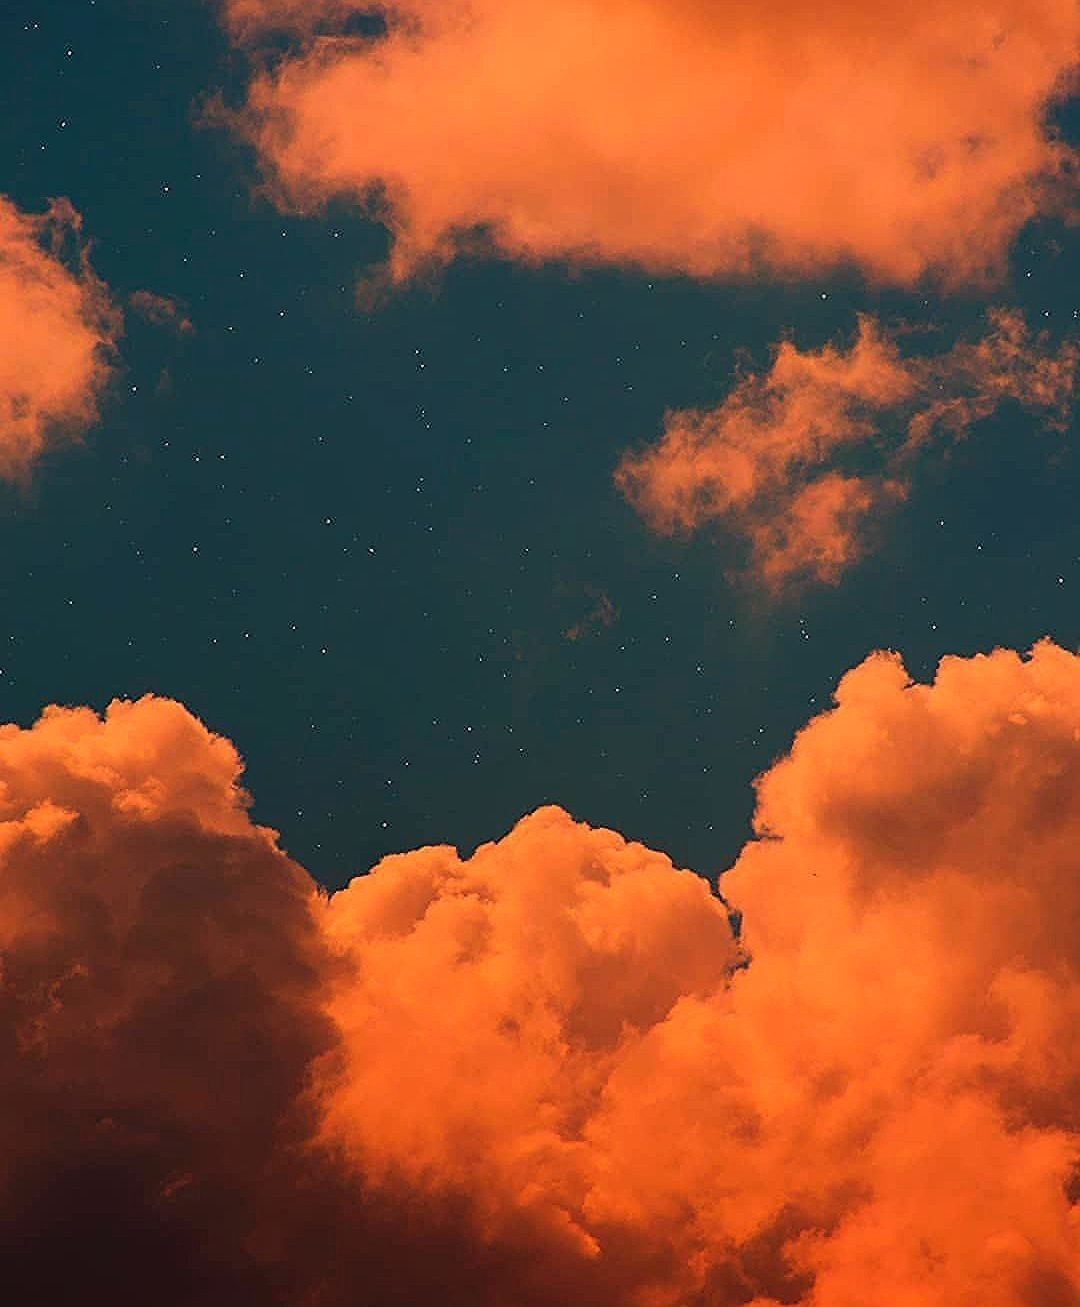 Clouds in the sky - Orange, sky